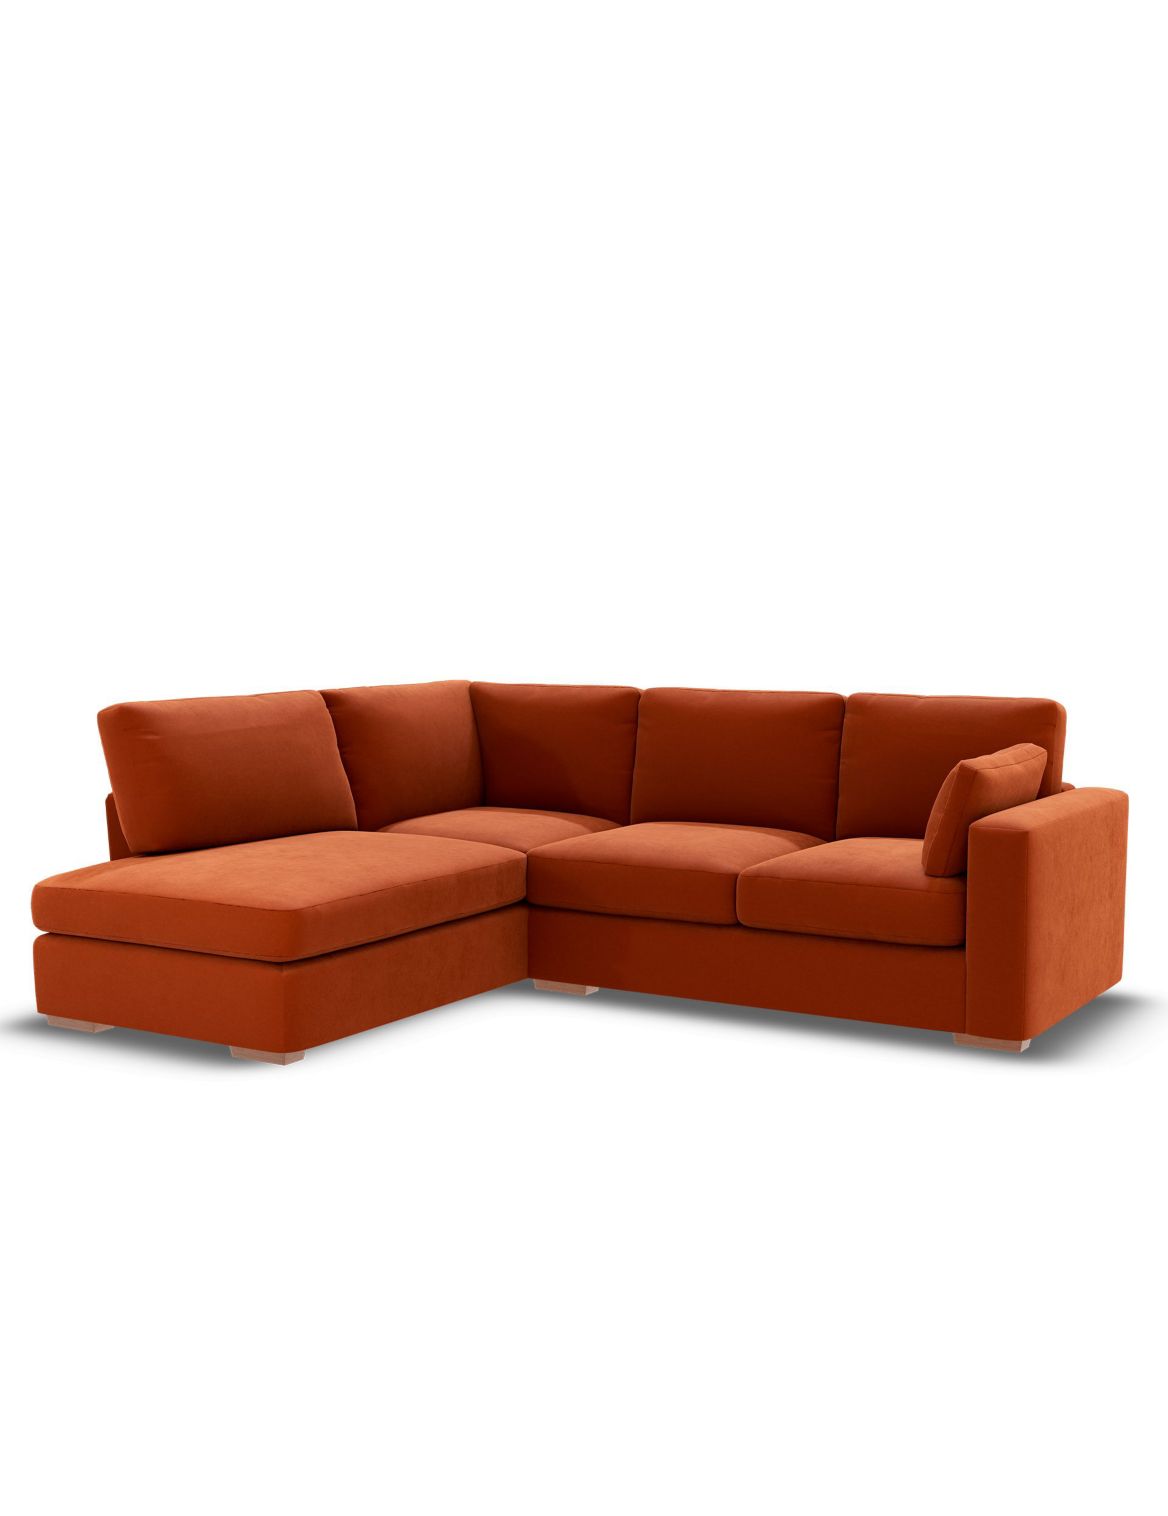 Boston Small Corner Chaise Sofa (Left-Hand) orange